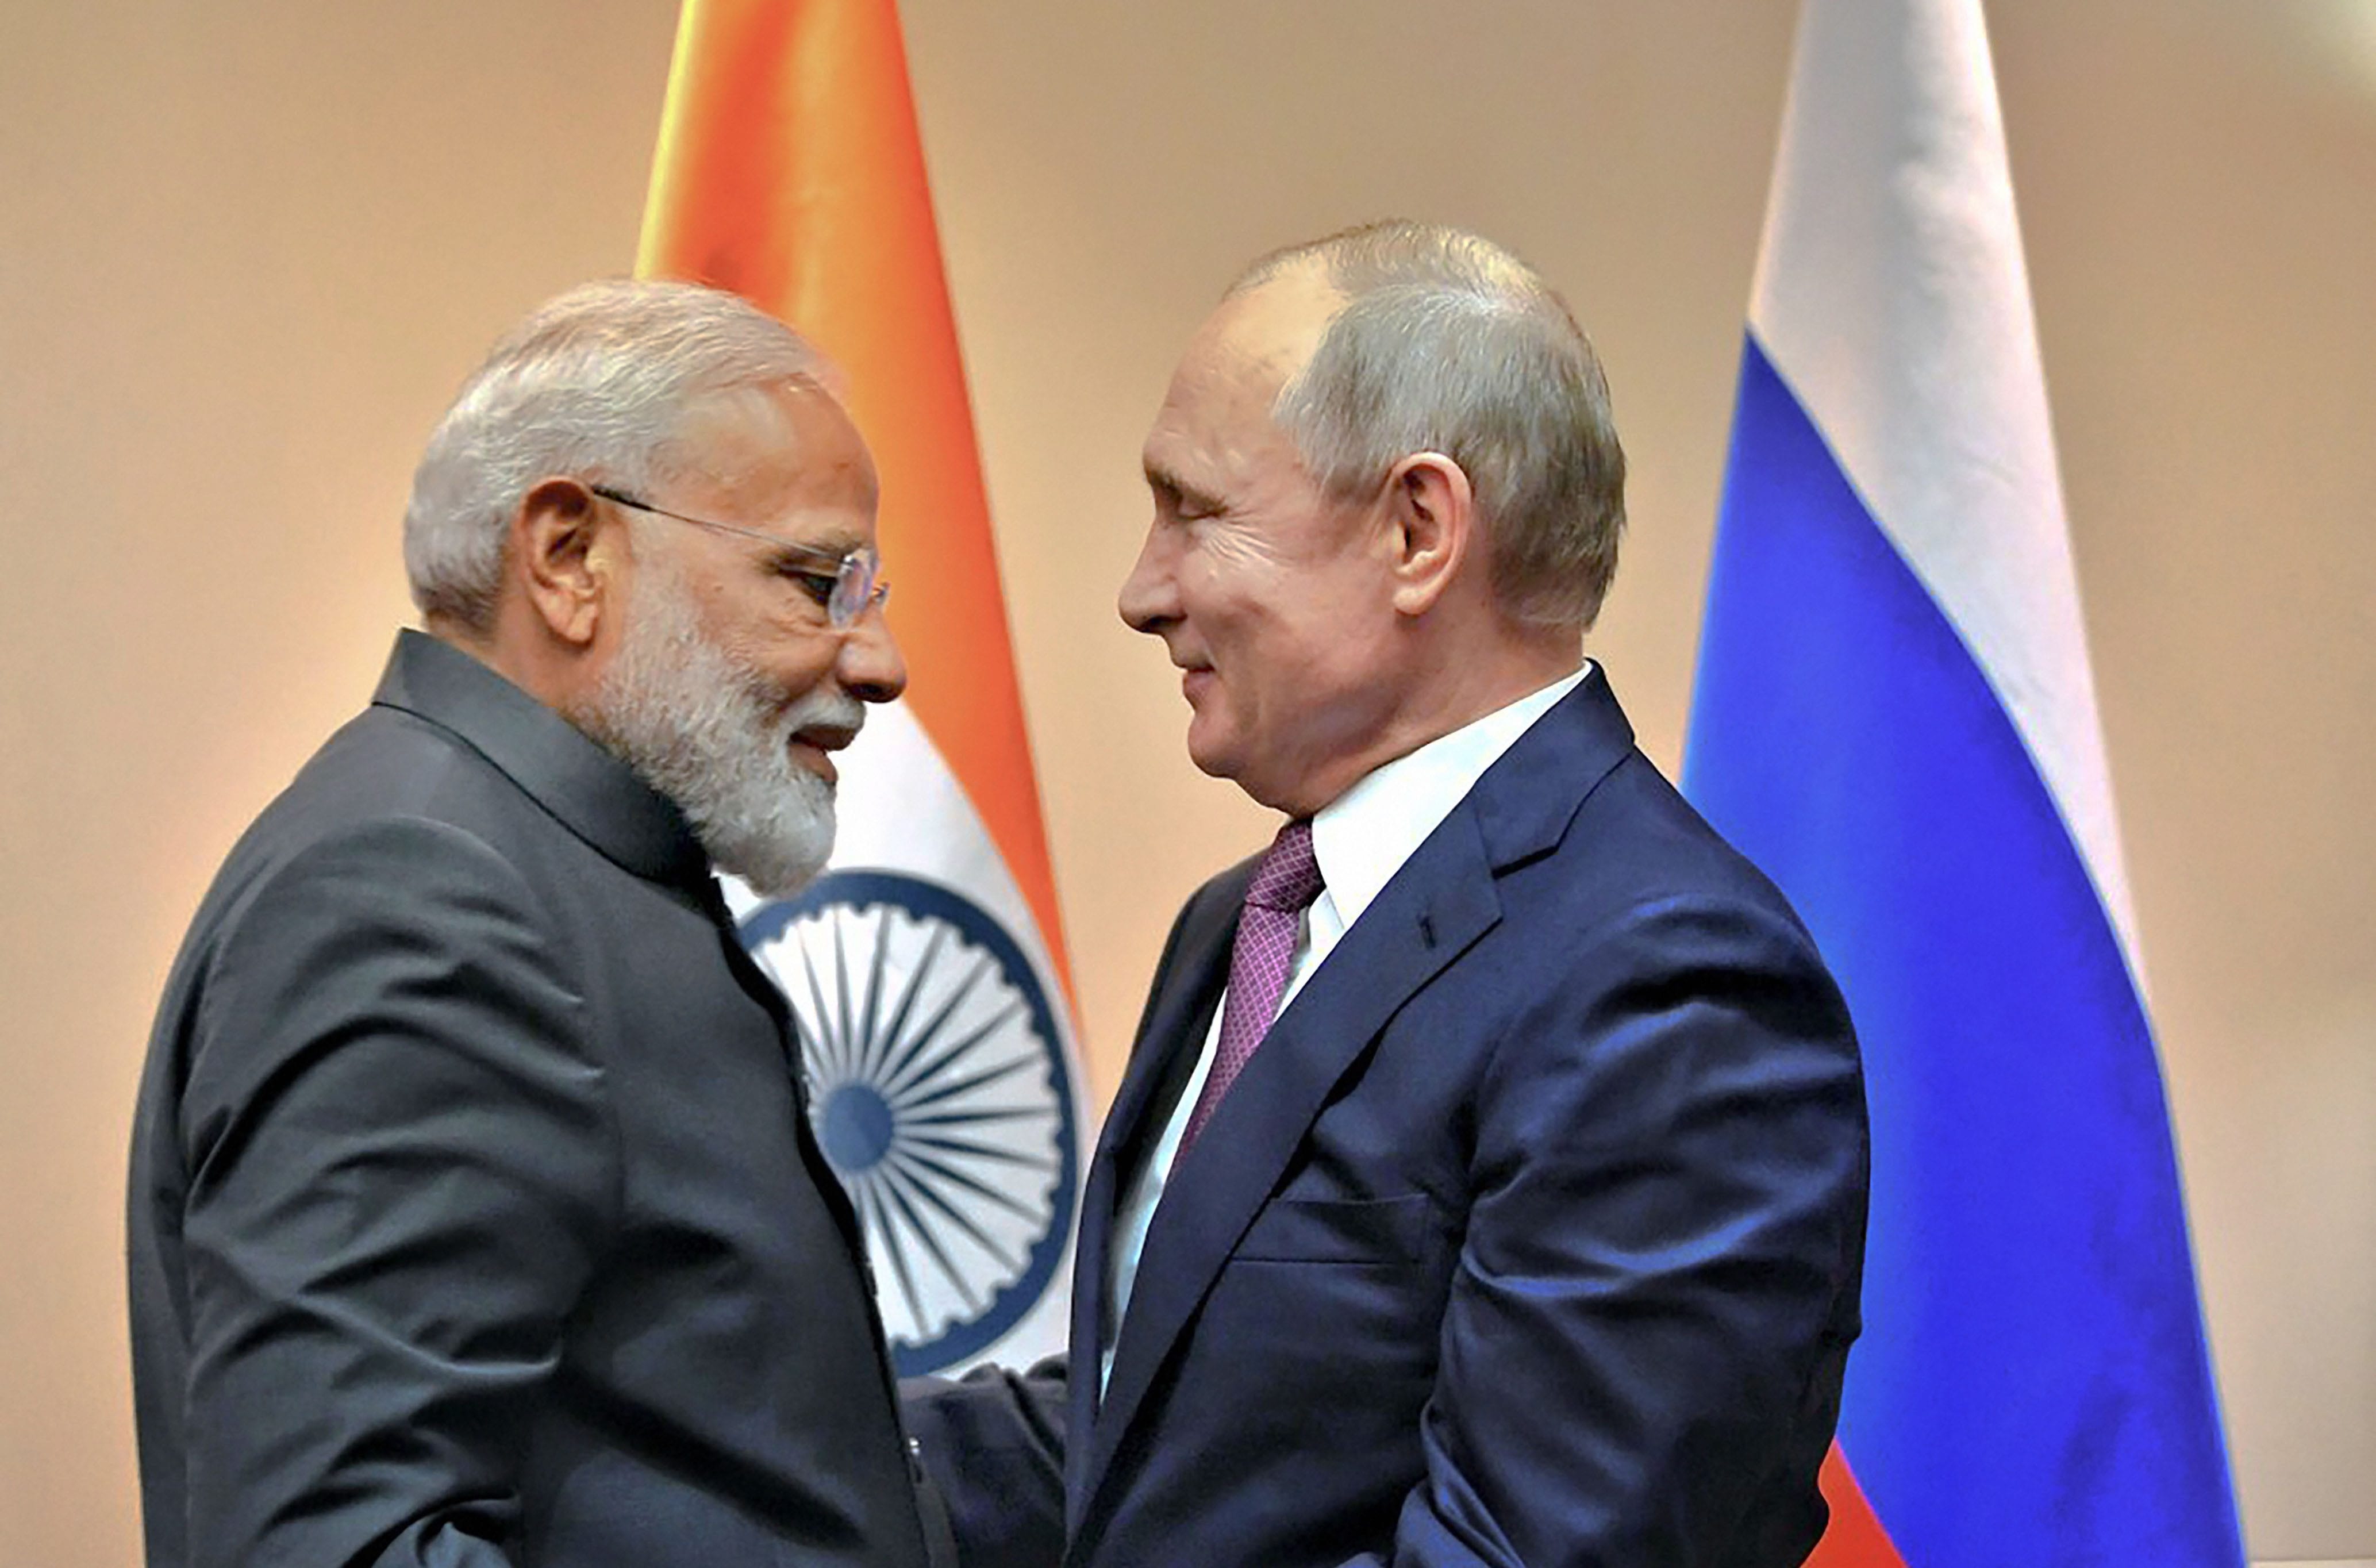 President Vladimir Putin calls Prime Minister Narendra Modi big friend of Russia